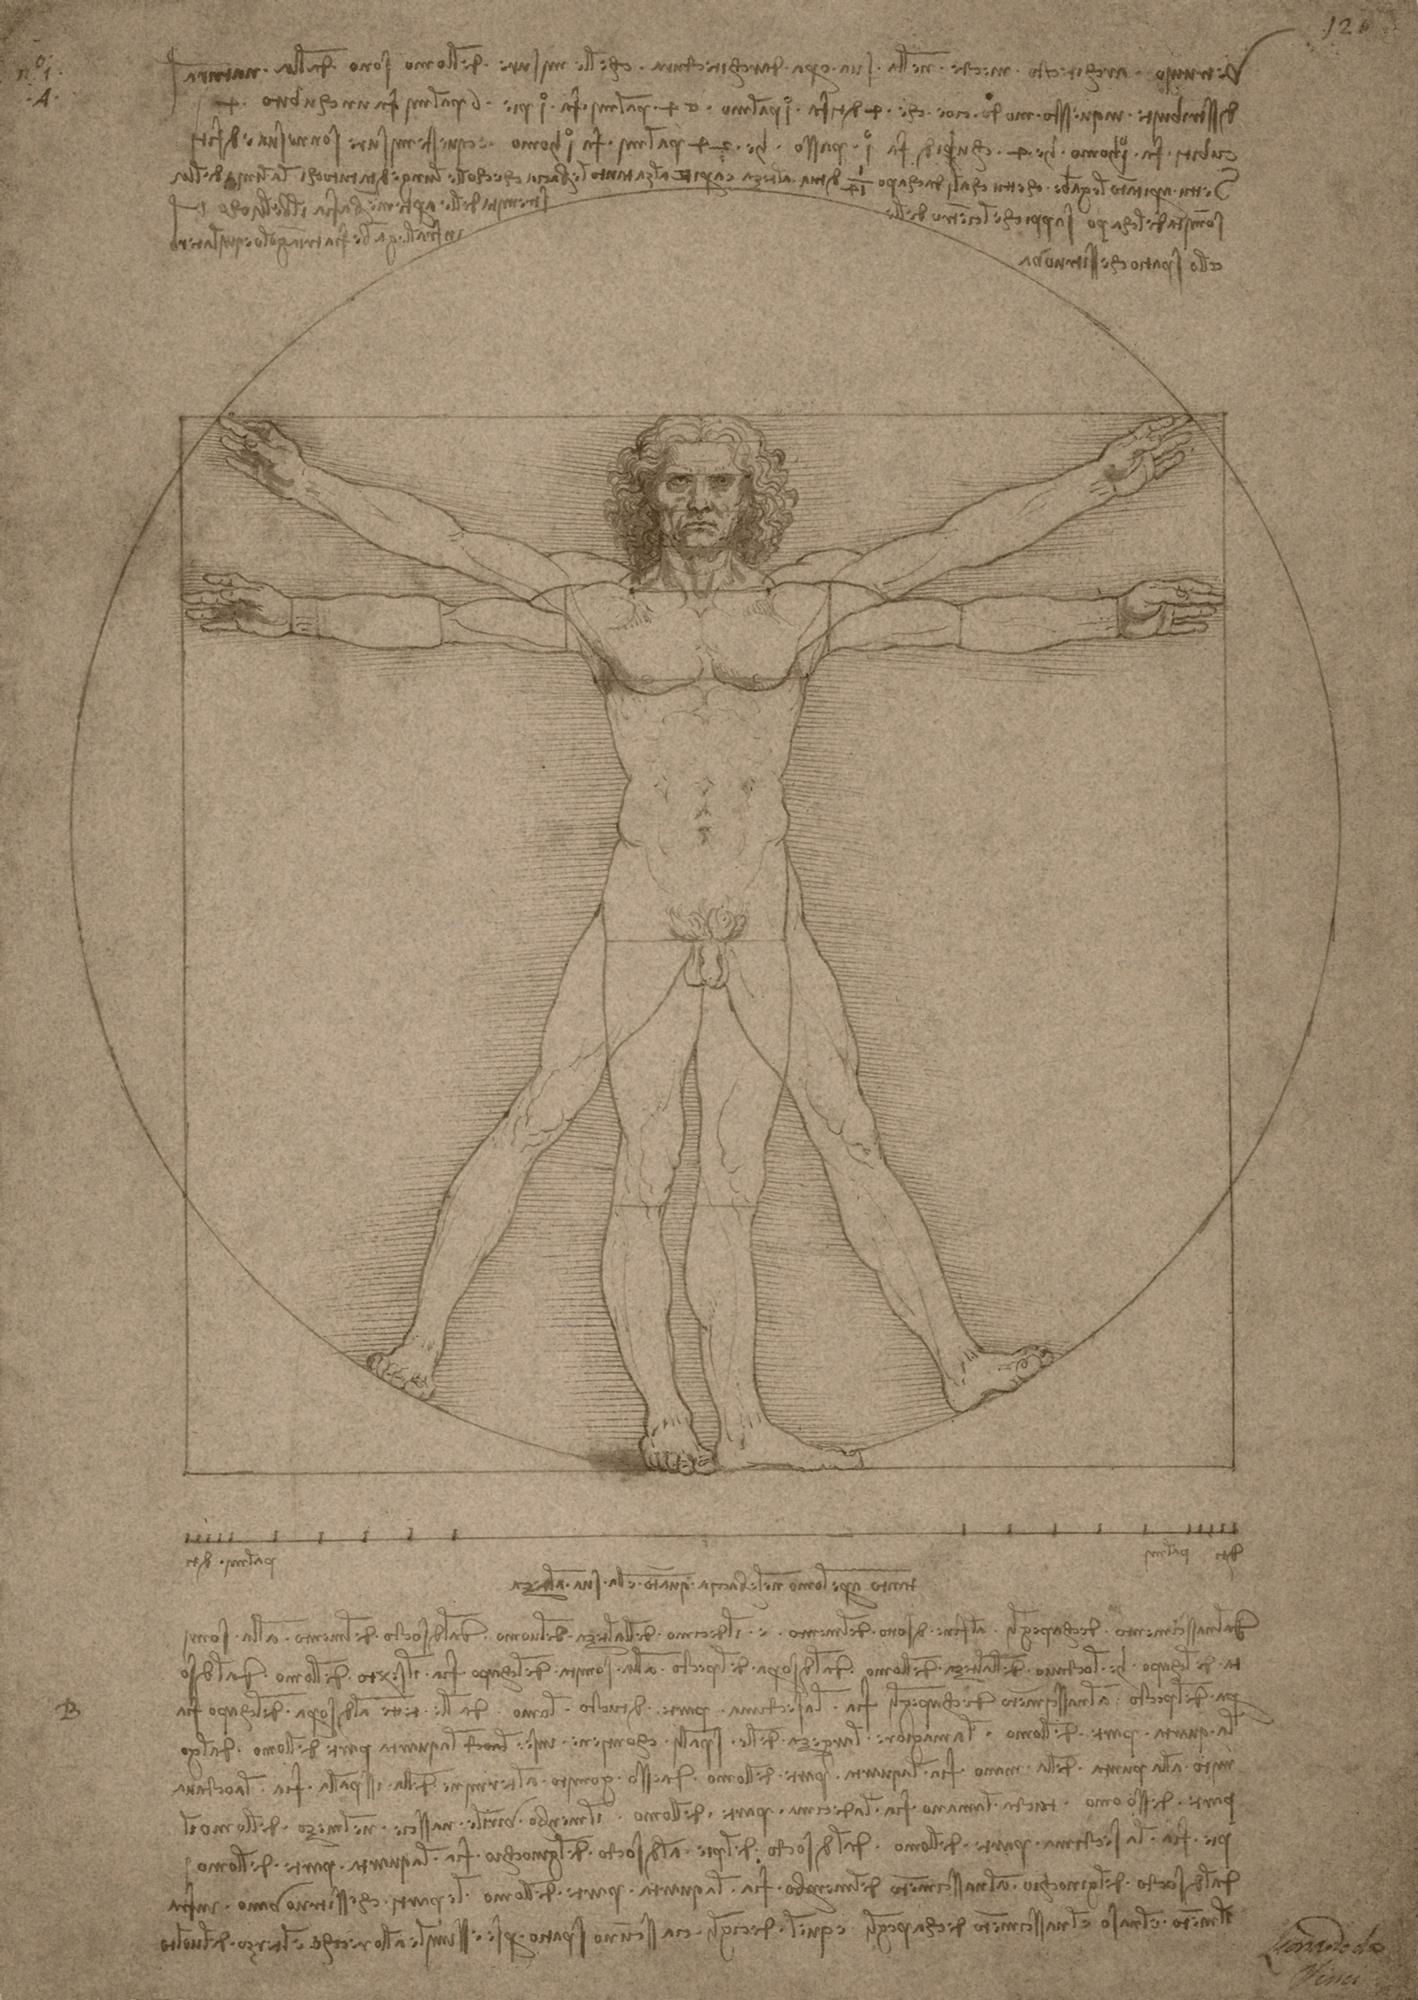 El hombre de Vitruvio de Leonardo da Vinci, hacia 1490.